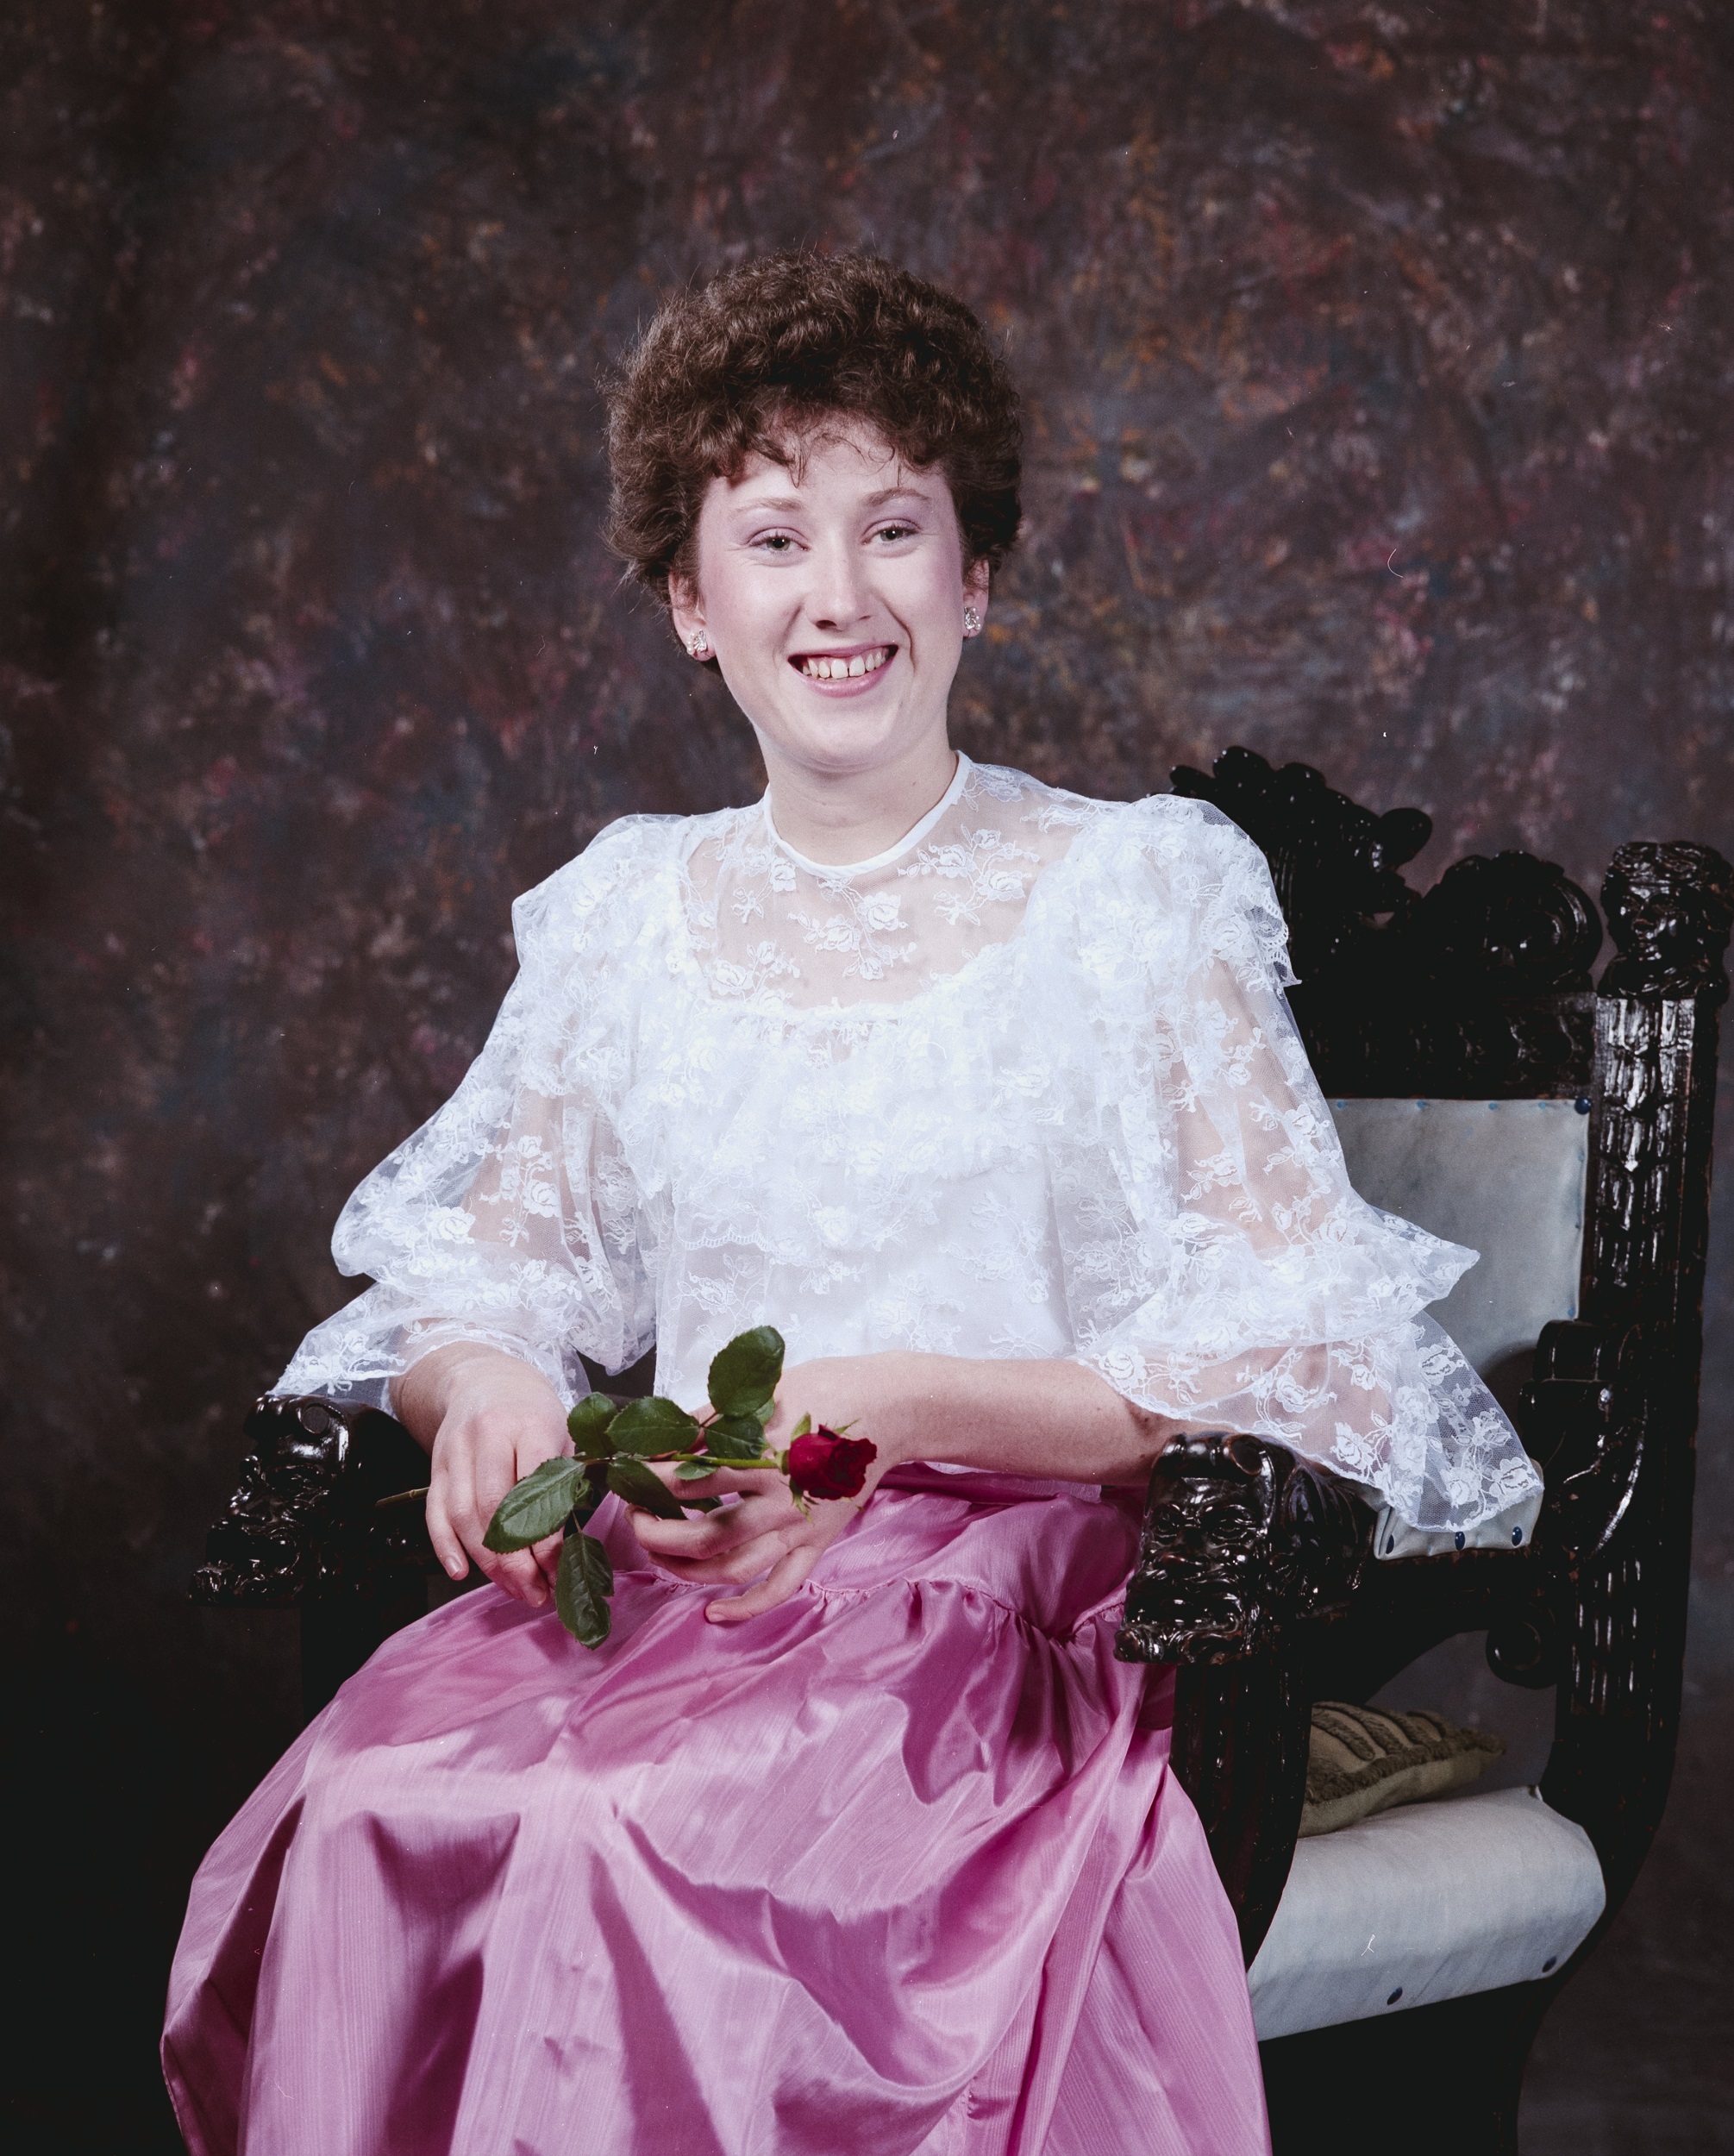 Portrait of Catherine Komarova (née Scott) at the Villa Maria ball in 1984. Canterbury Museum 2019.10.4828